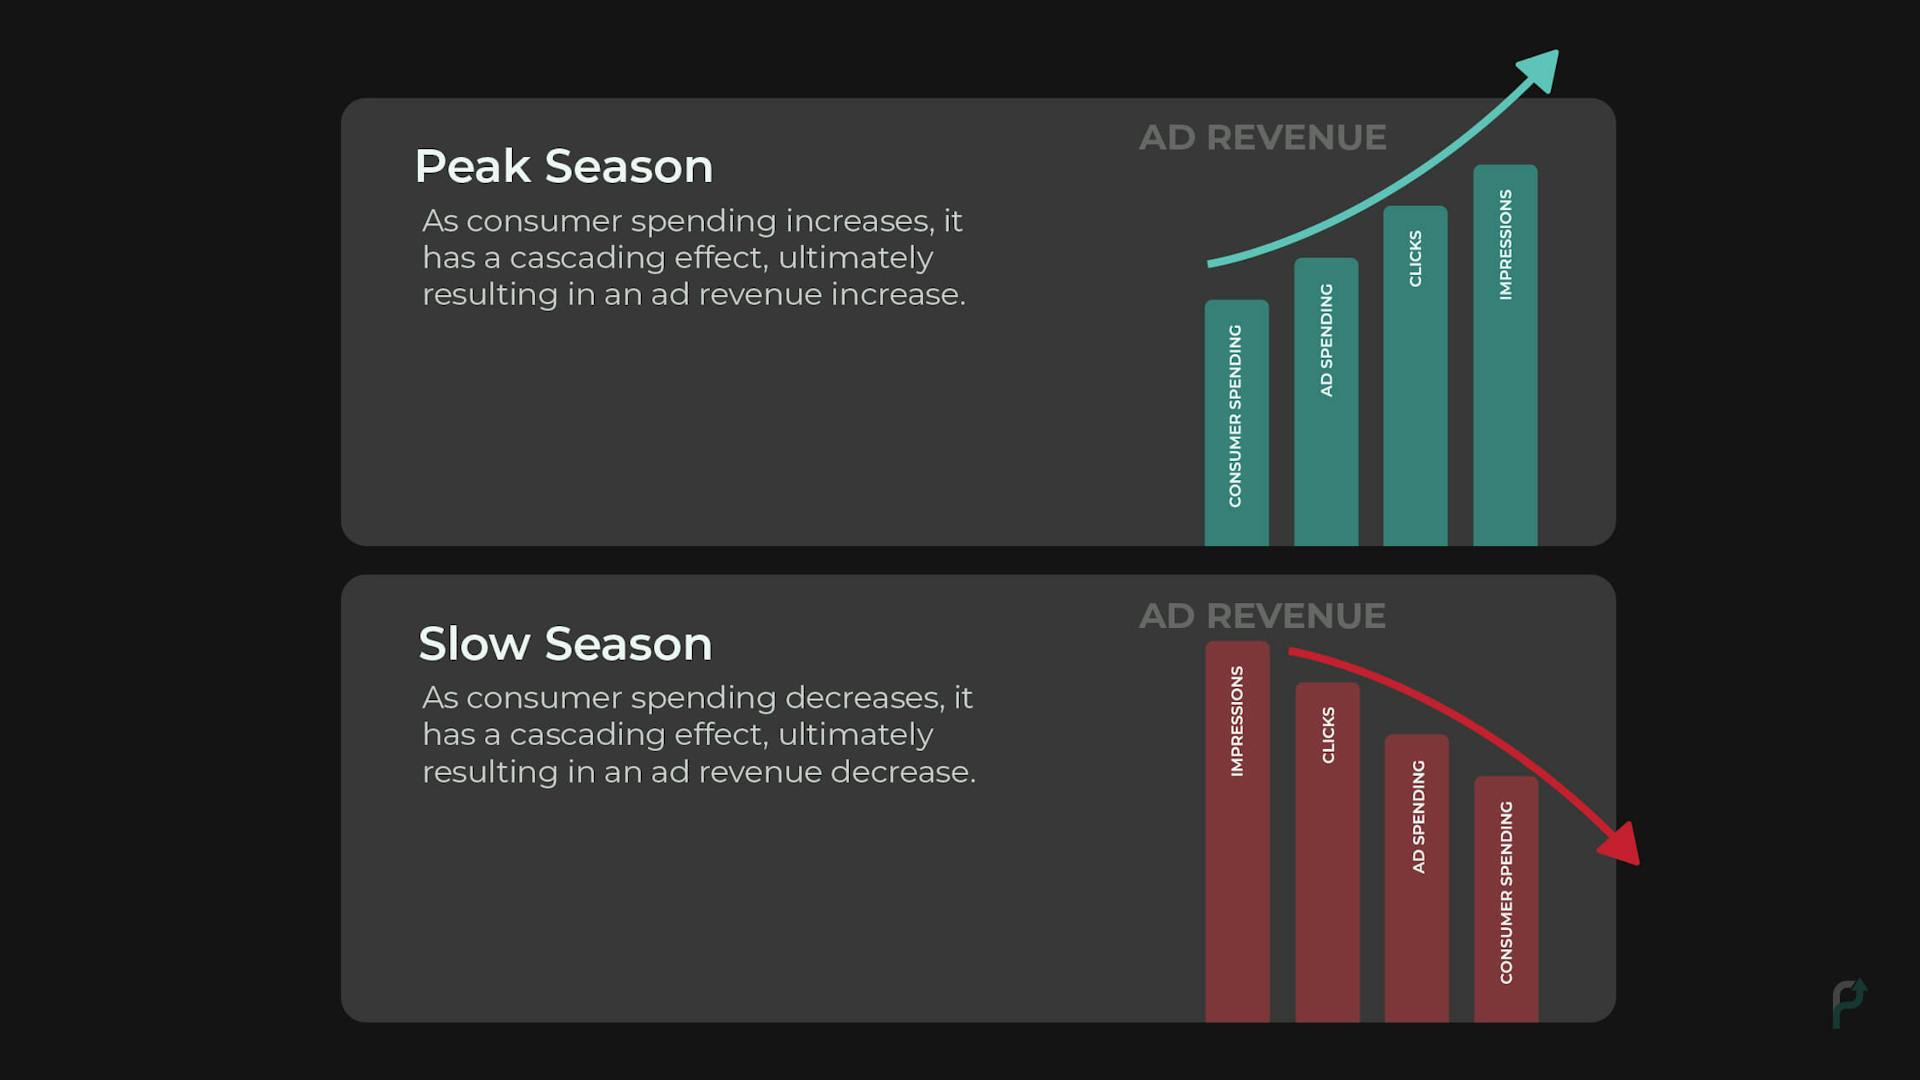 Revenue across different seasons